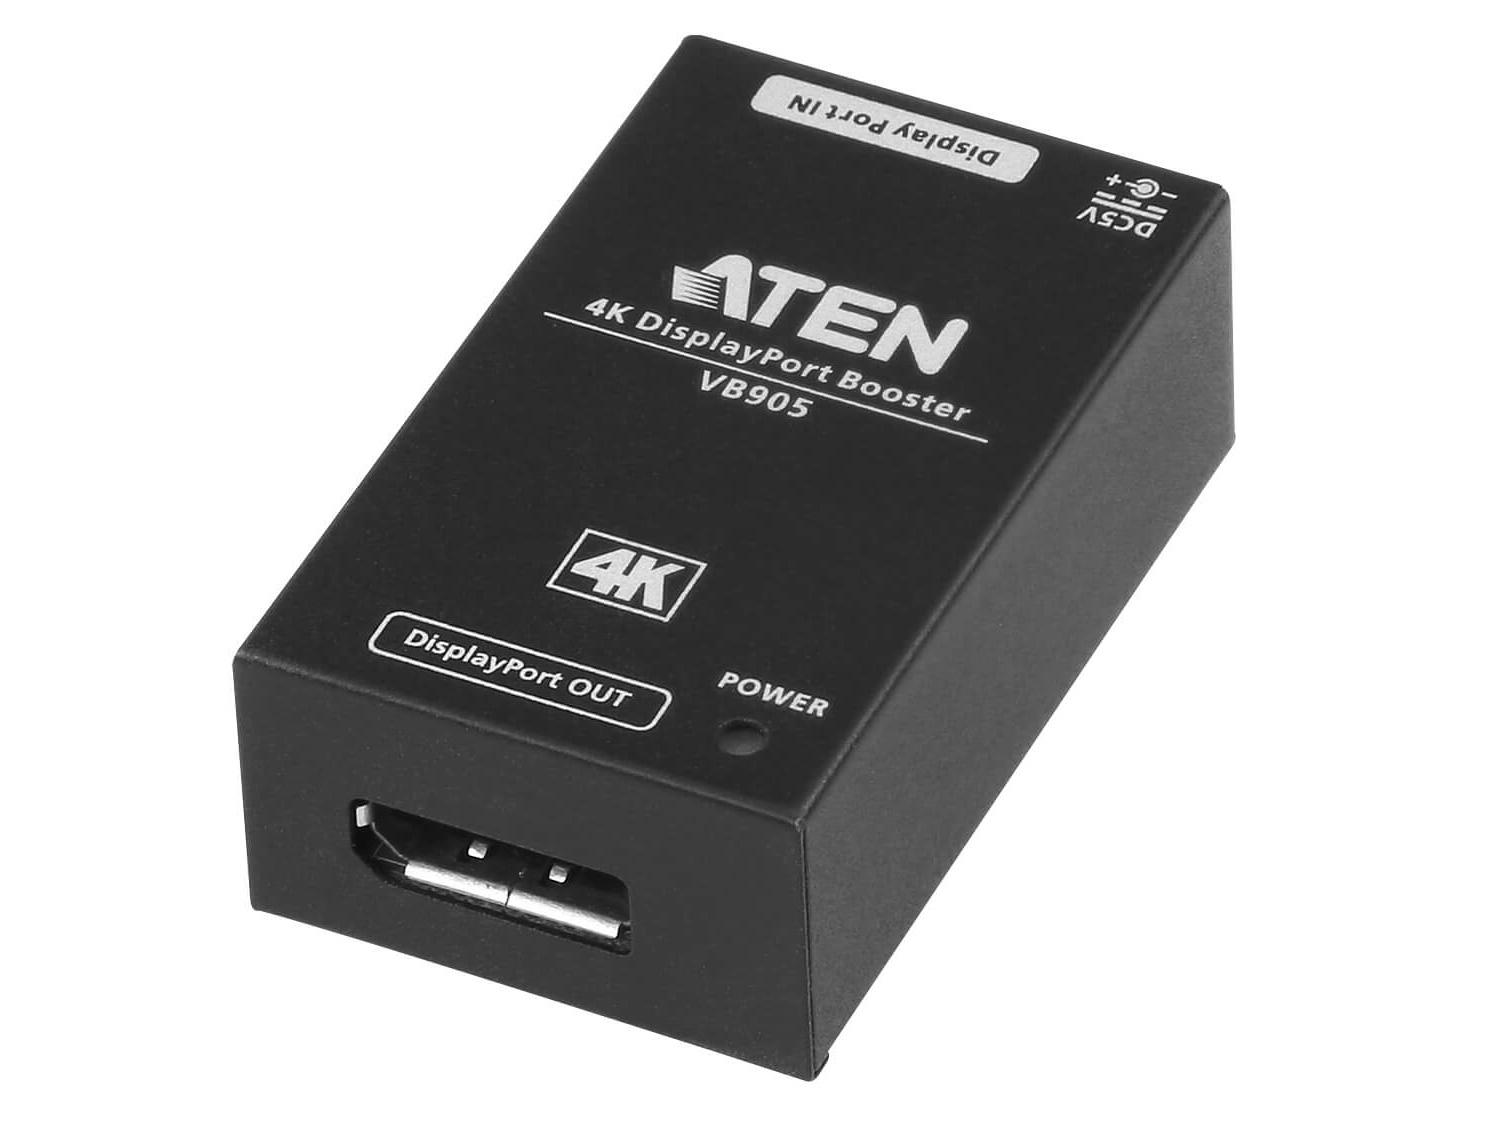 VB905 4K DisplayPort Booster by Aten